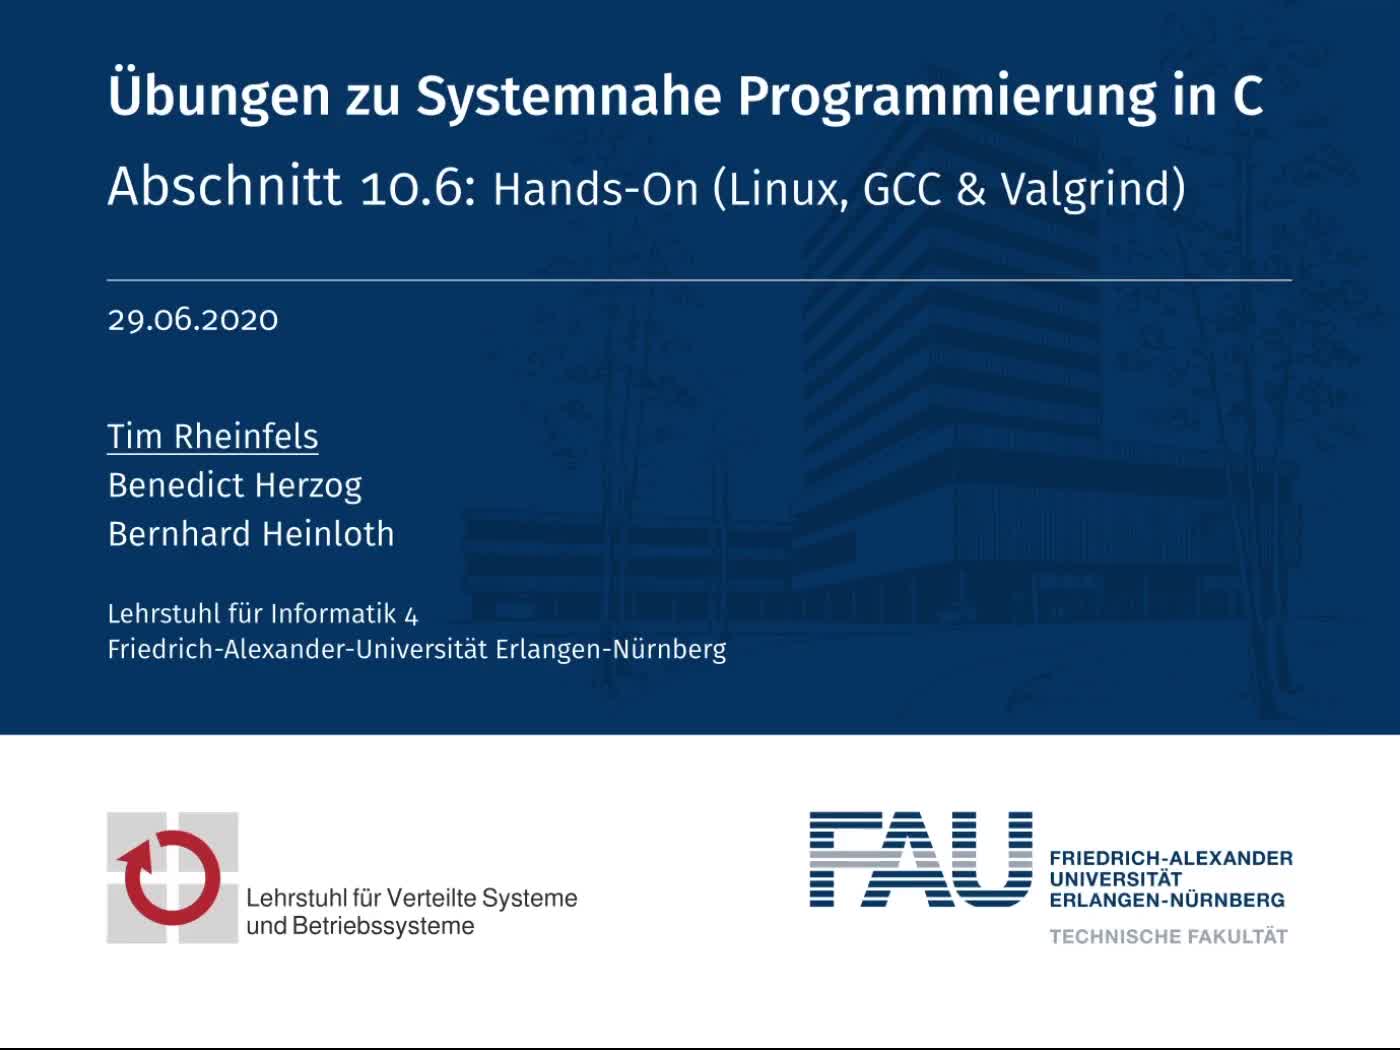 10.6: Hands-On (Linux, GCC & Valgrind) preview image